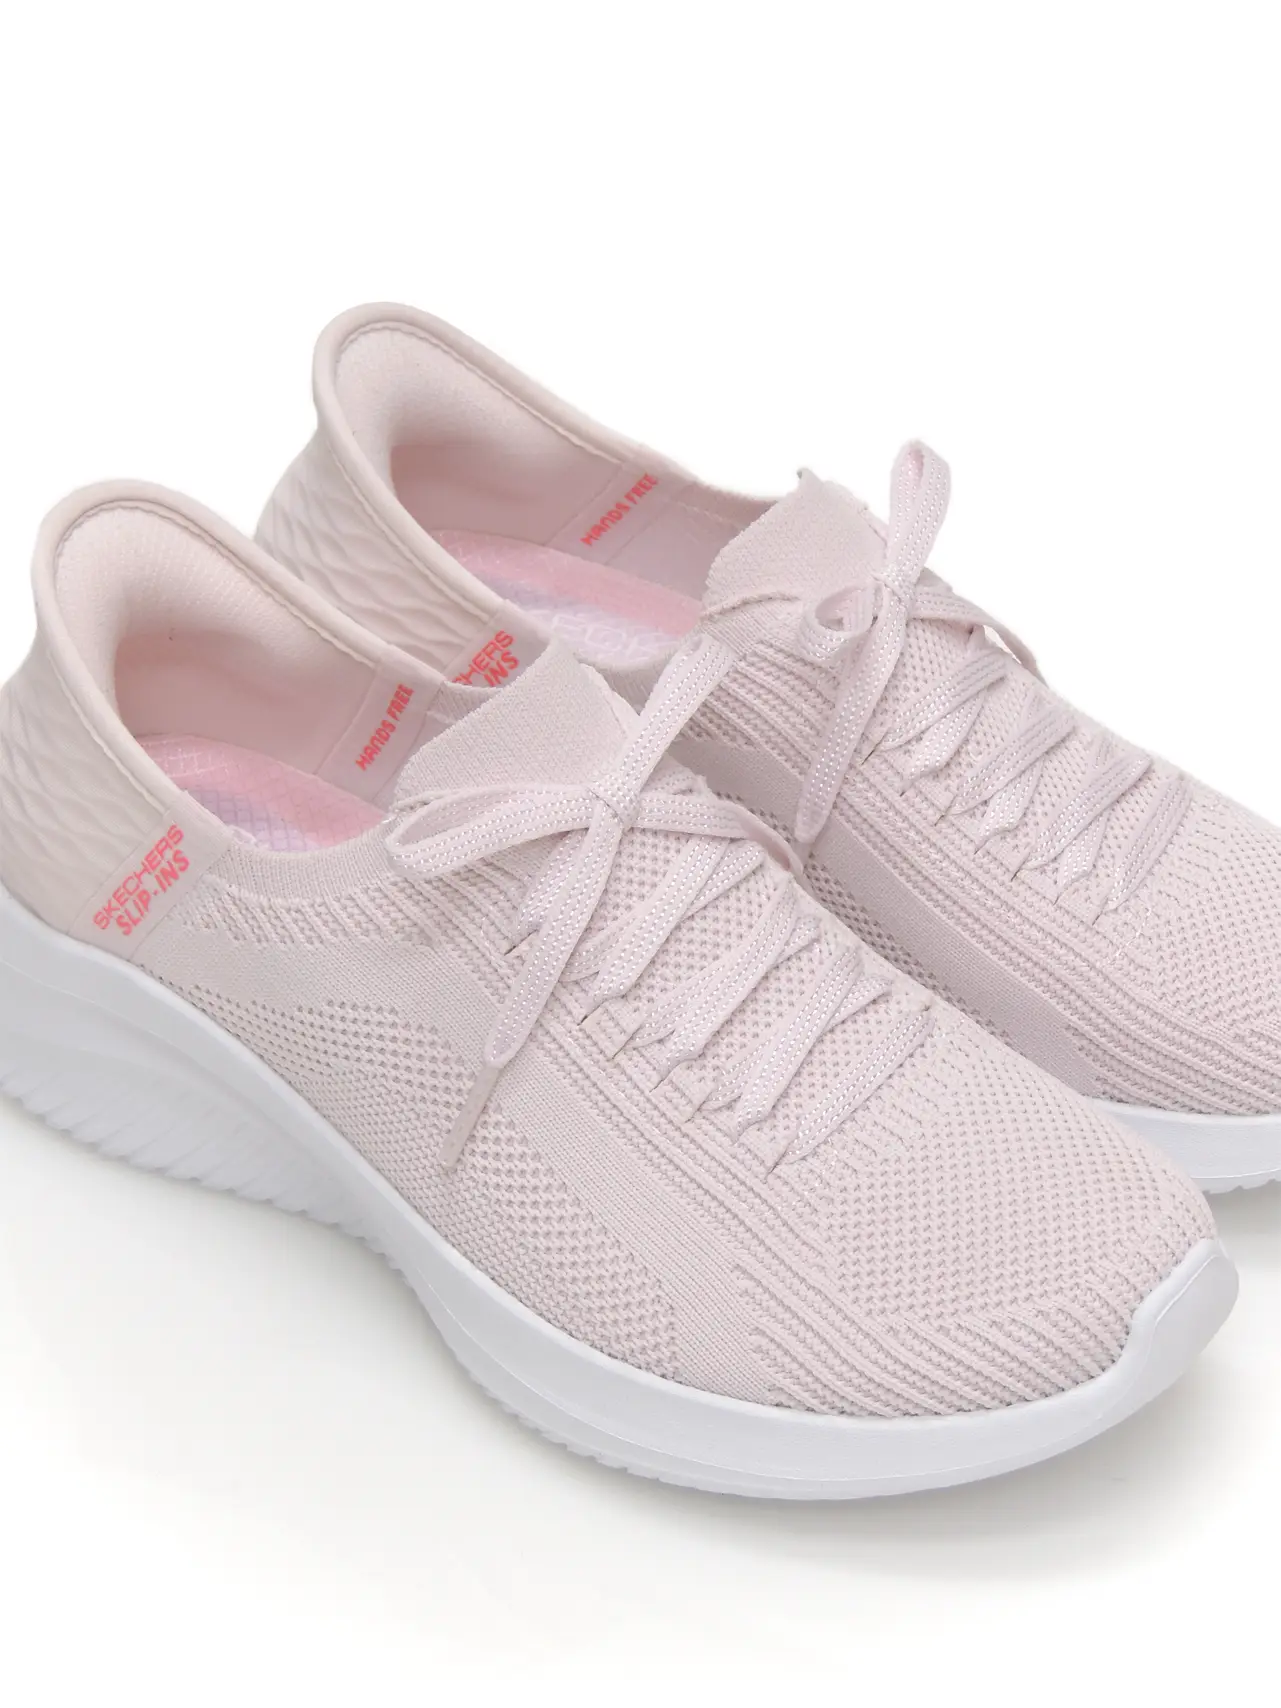 sneakers--skechers-149710-textil-rosa